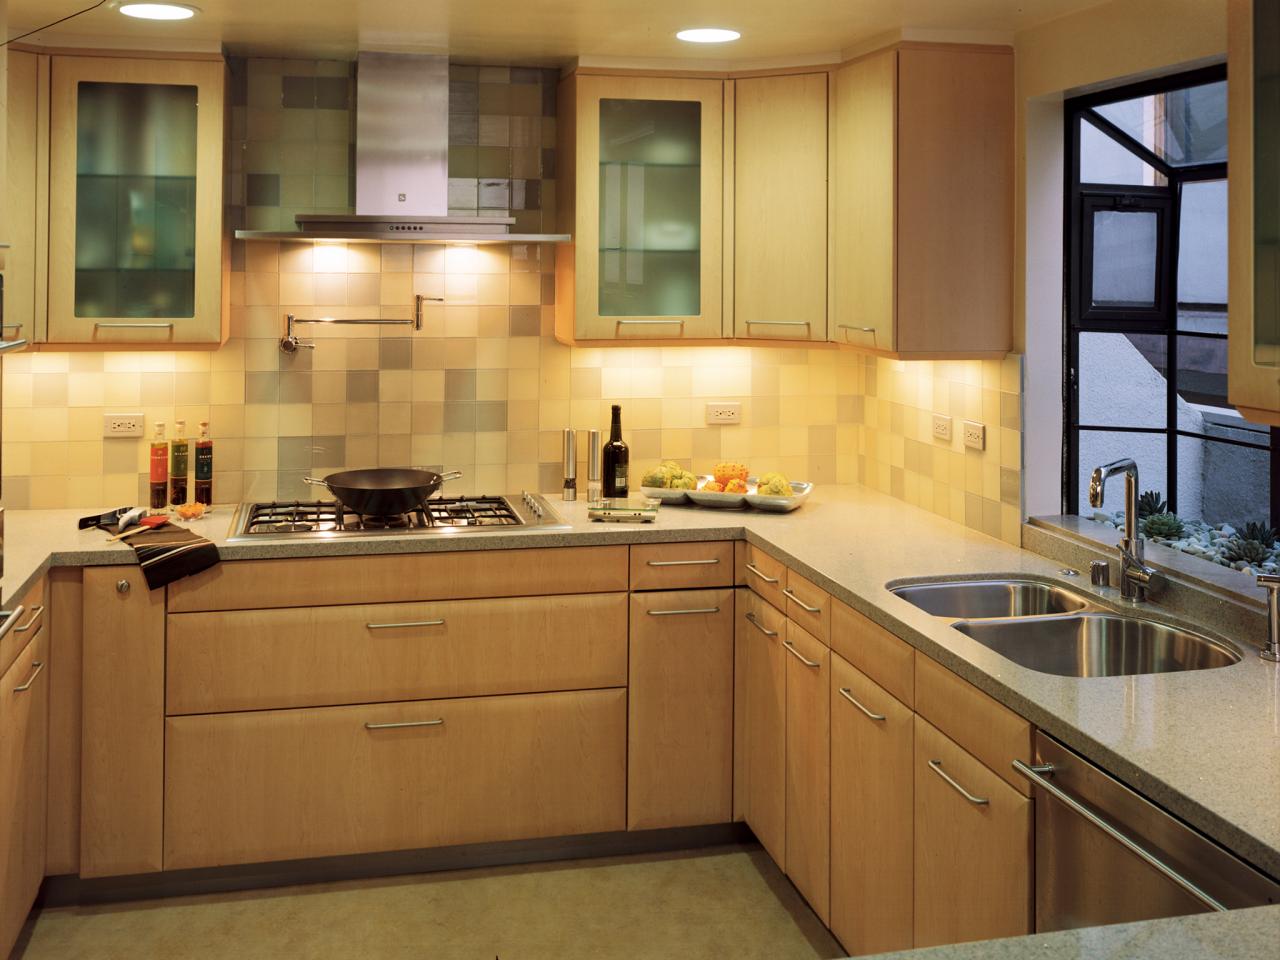 Kitchen Cabinet Design Ideas Pictures Options Tips Ideas HGTV